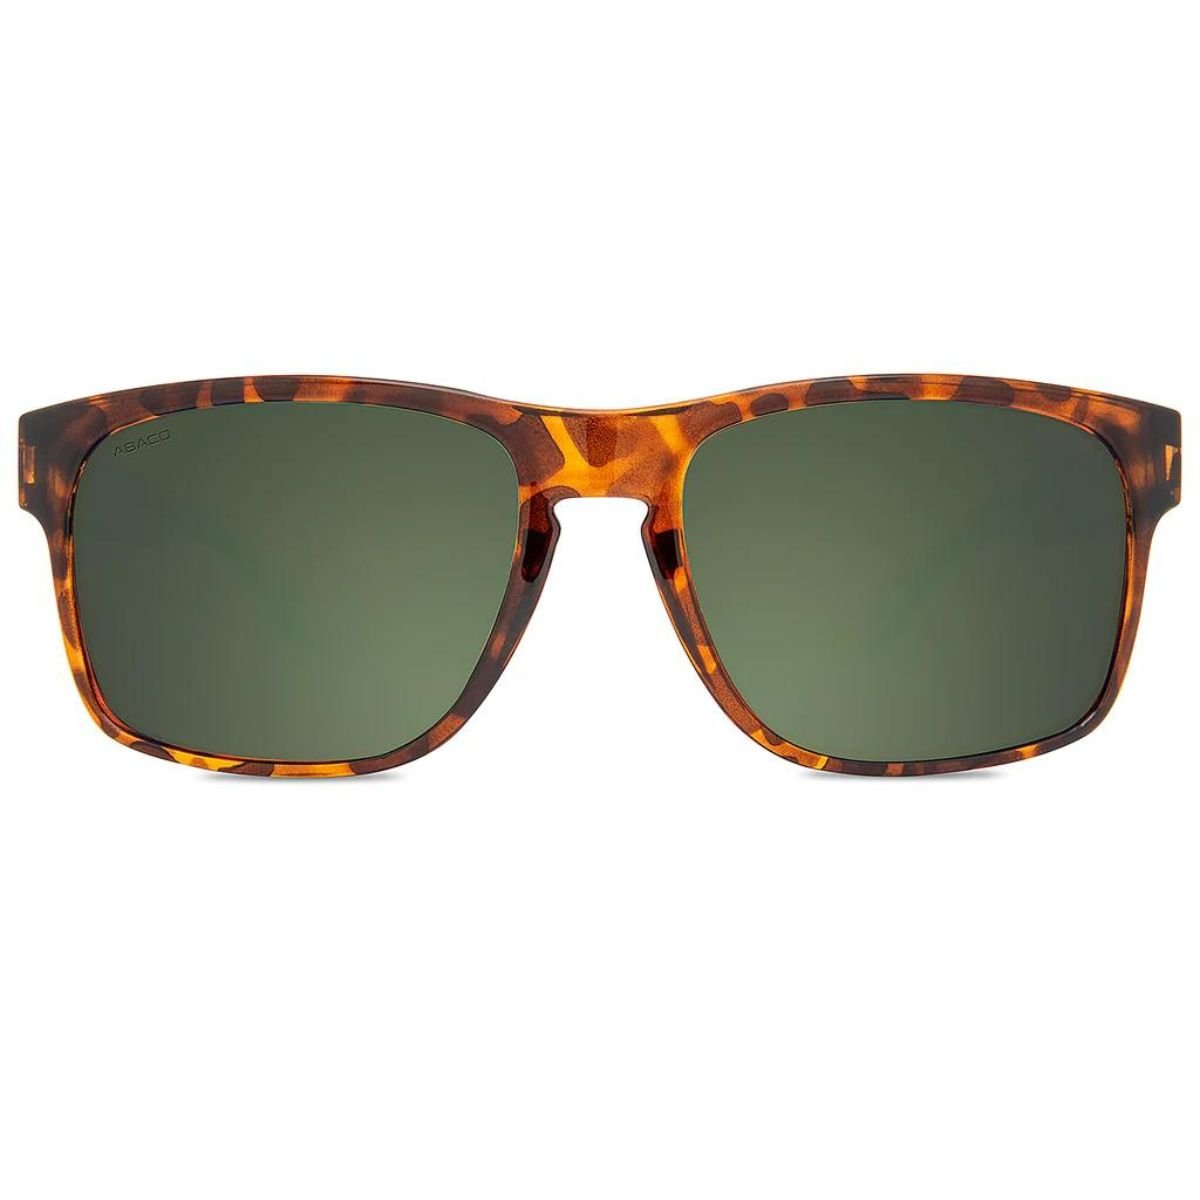 Abaco Dockside Sunglasses in Tortoise/G15 - BoardCo